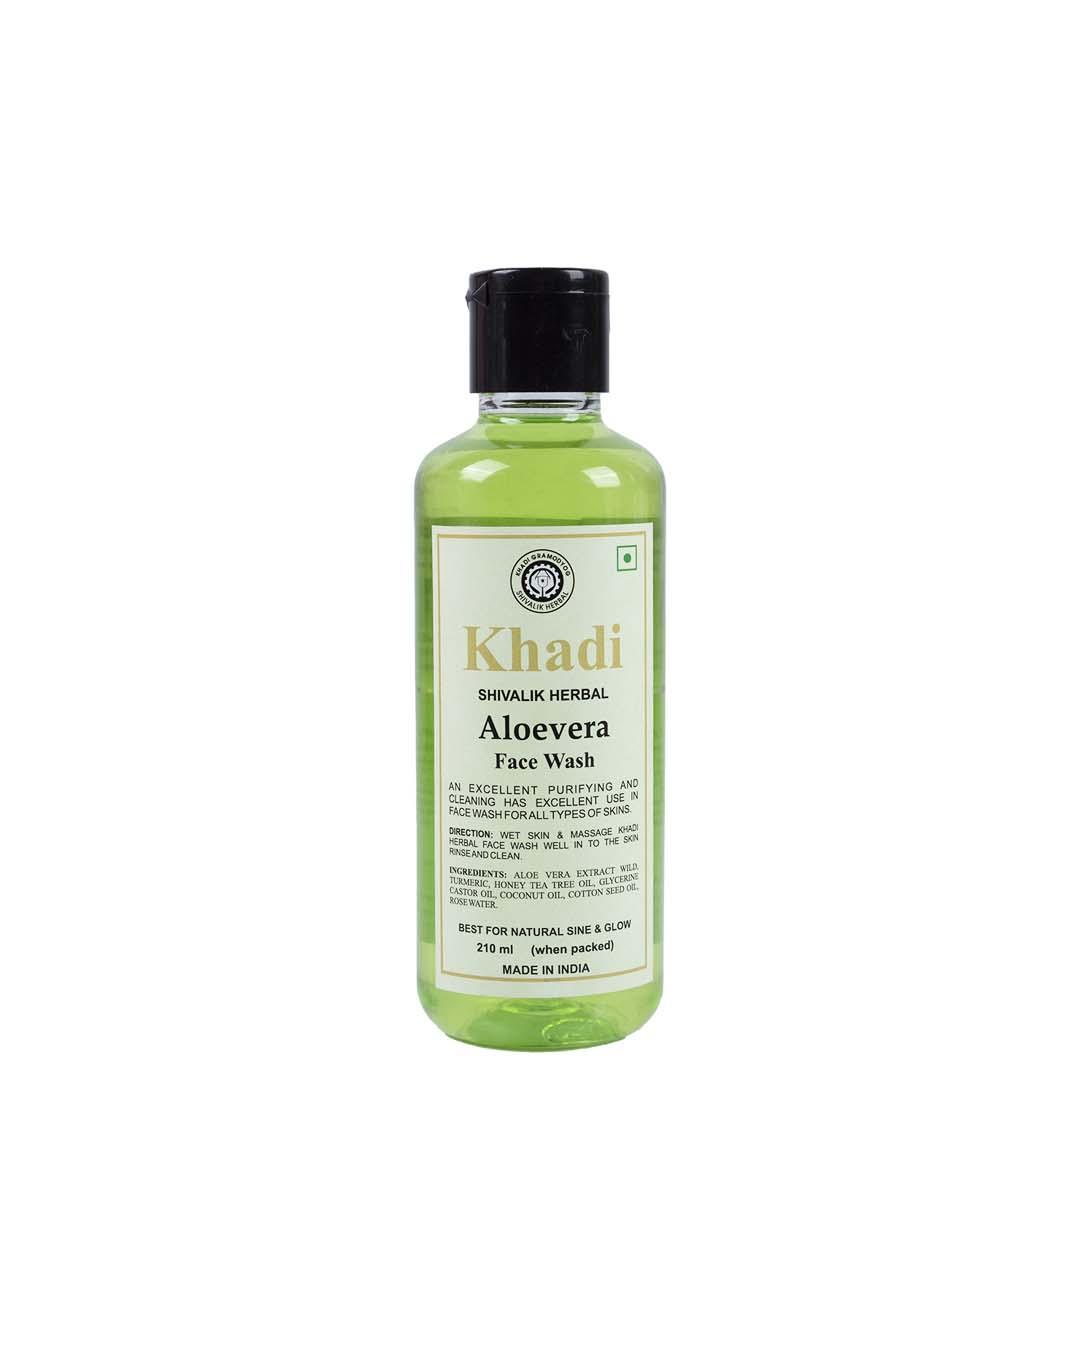 Khadi Aloe Vera Face Wash, 210 mL - MARKET 99